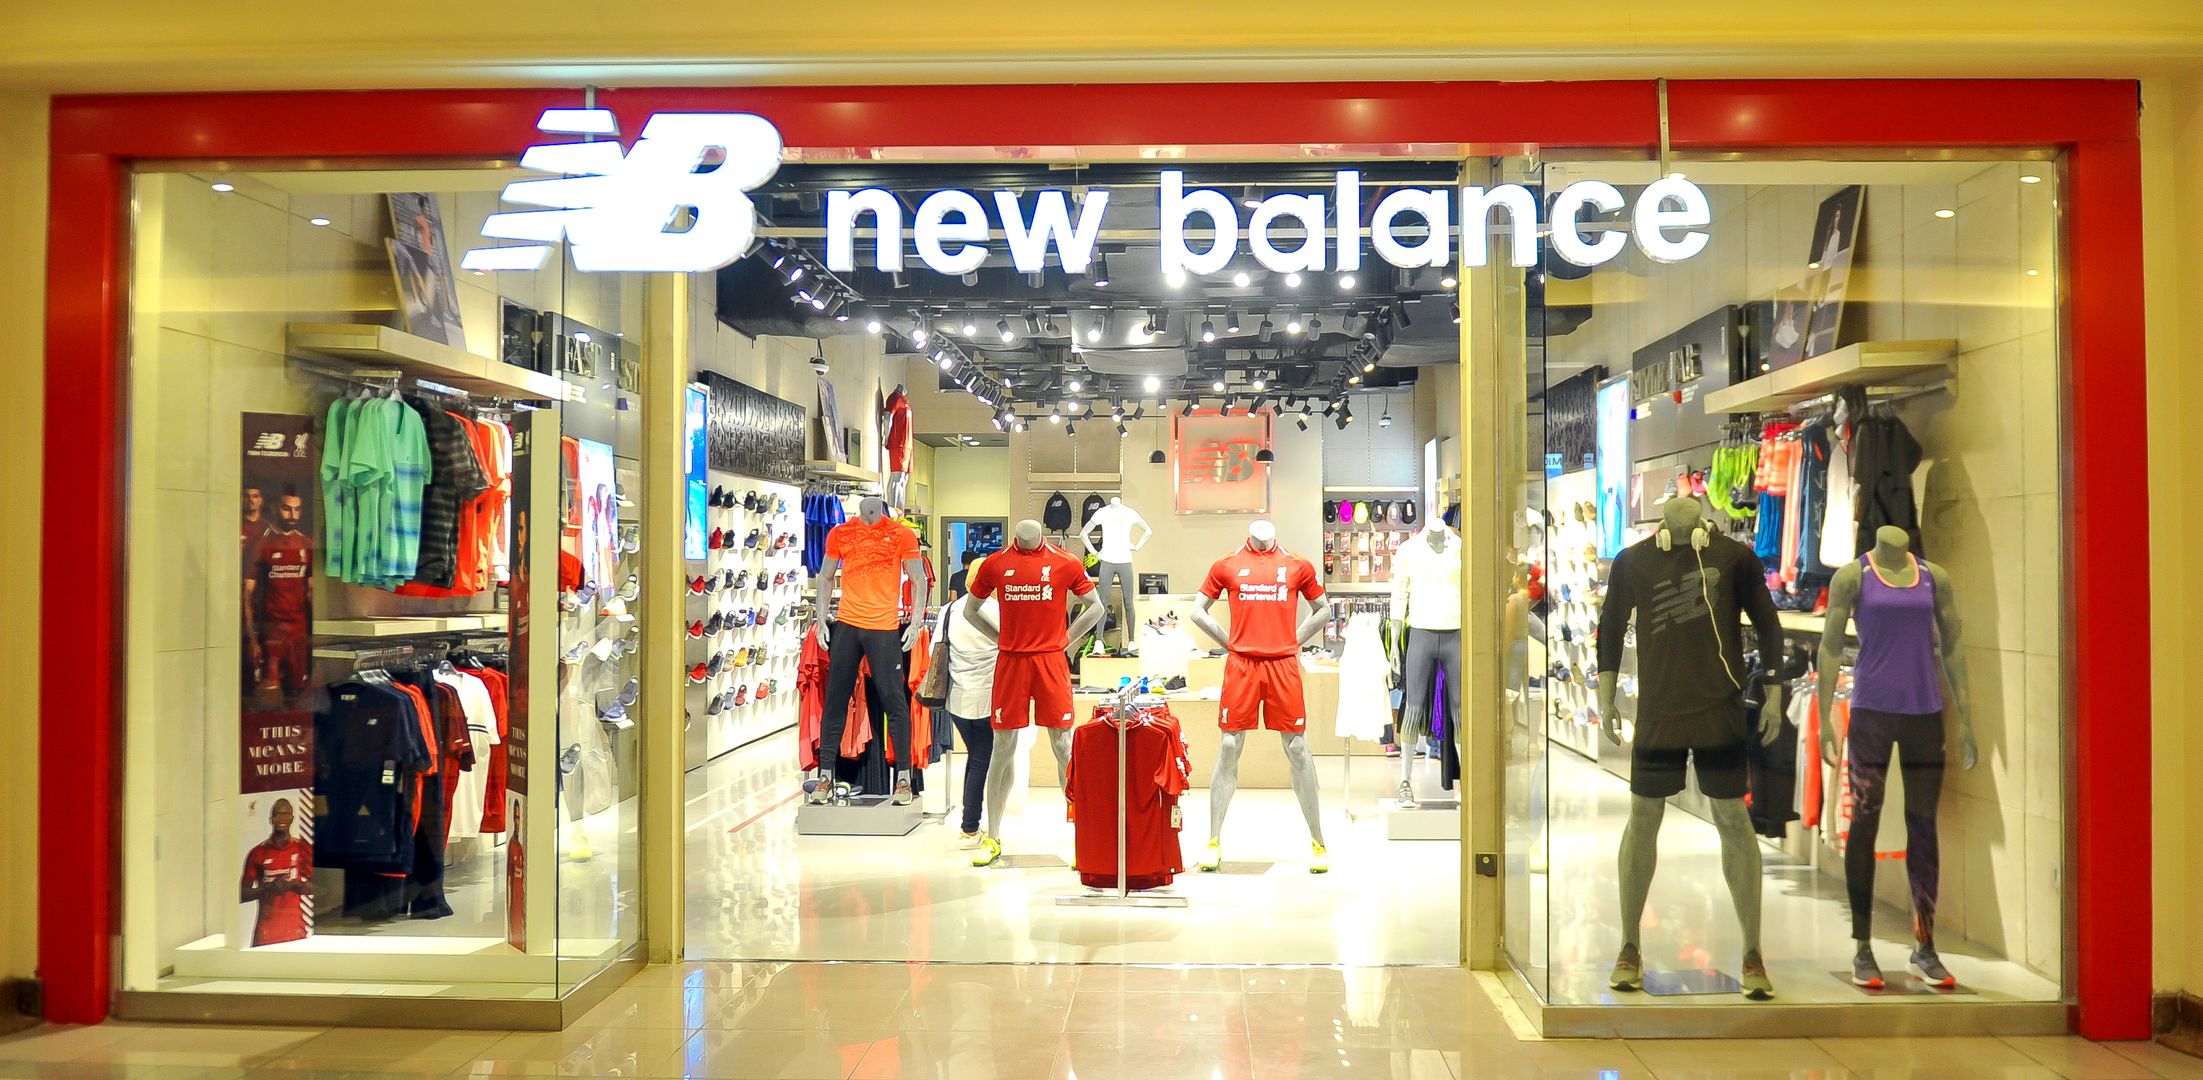 new balance retail store near me - 60 